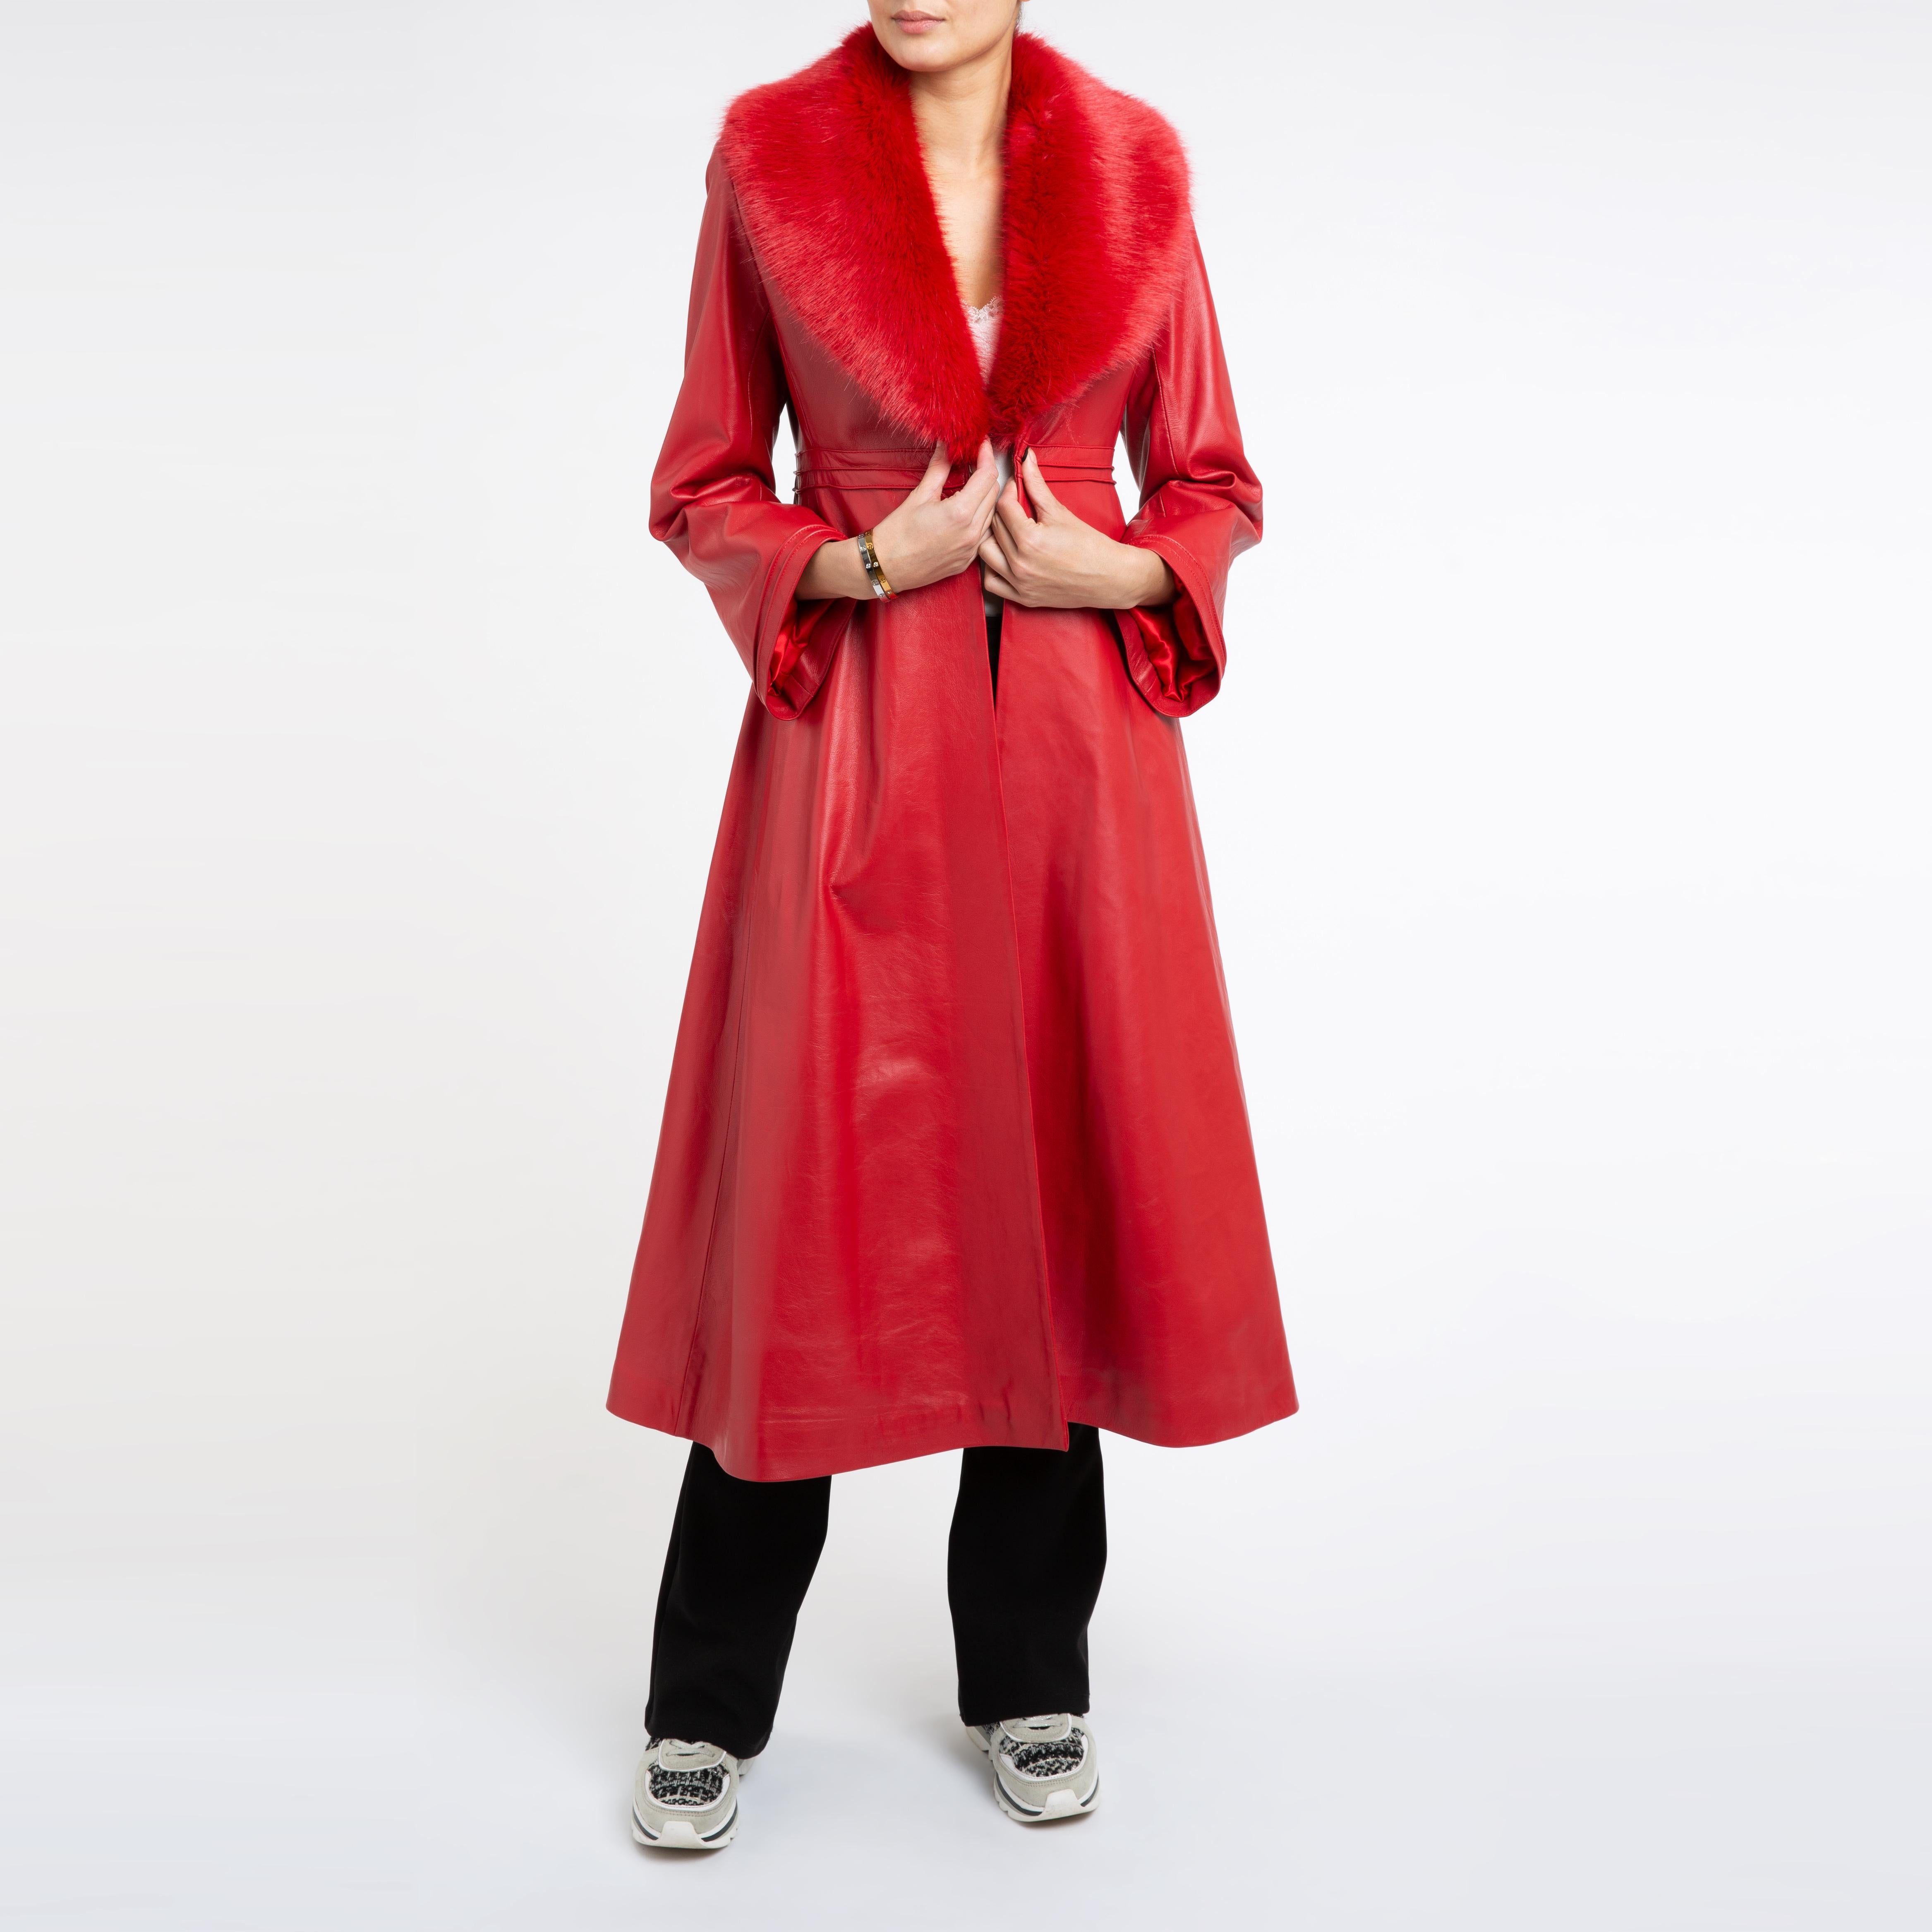 Women's Verheyen London Edward Leather Coat with Faux Fur Collar in Red - Size uk 10 For Sale